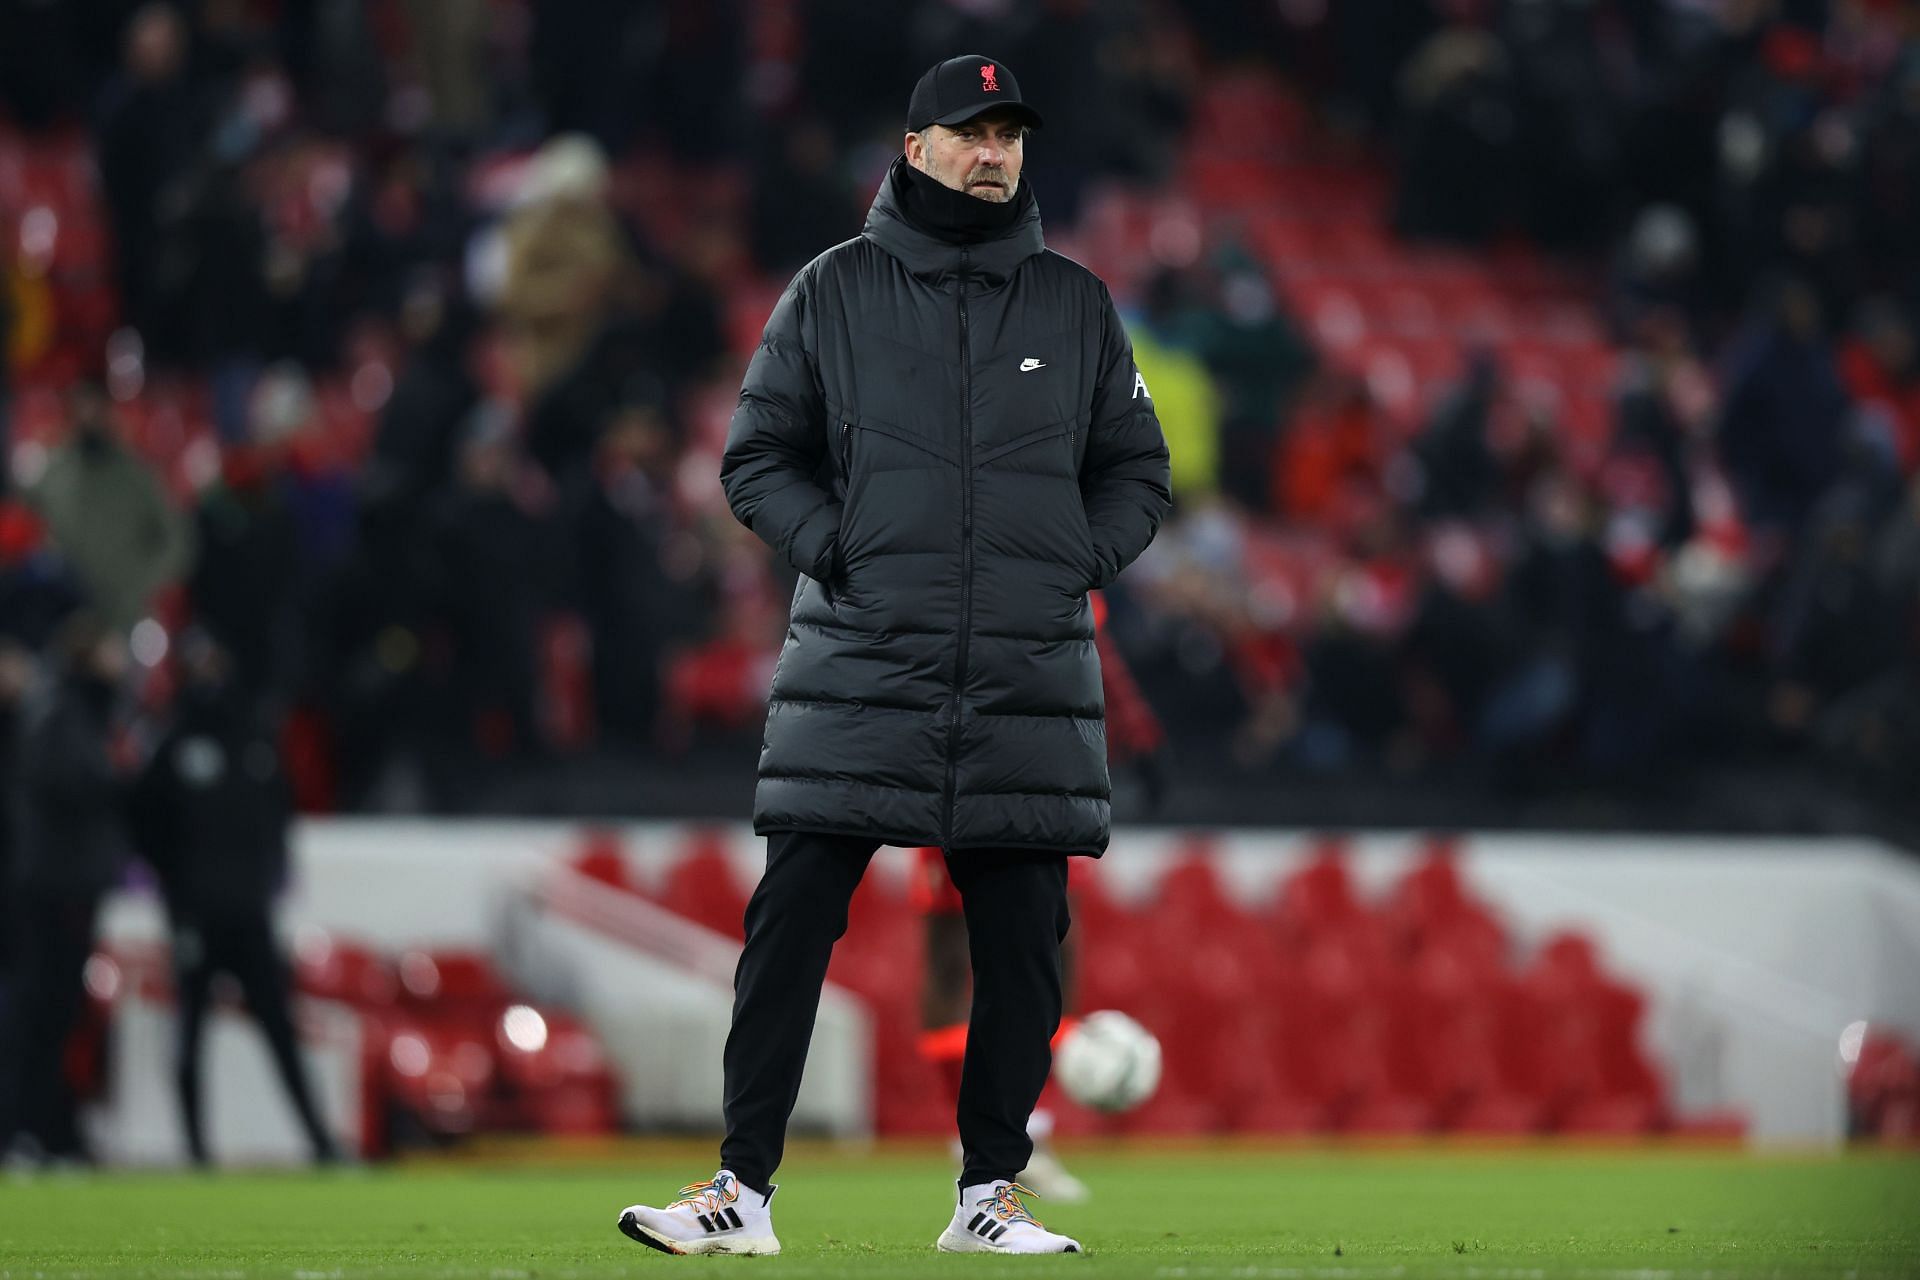 Liverpool boss Jurgen Klopp looks on during a game